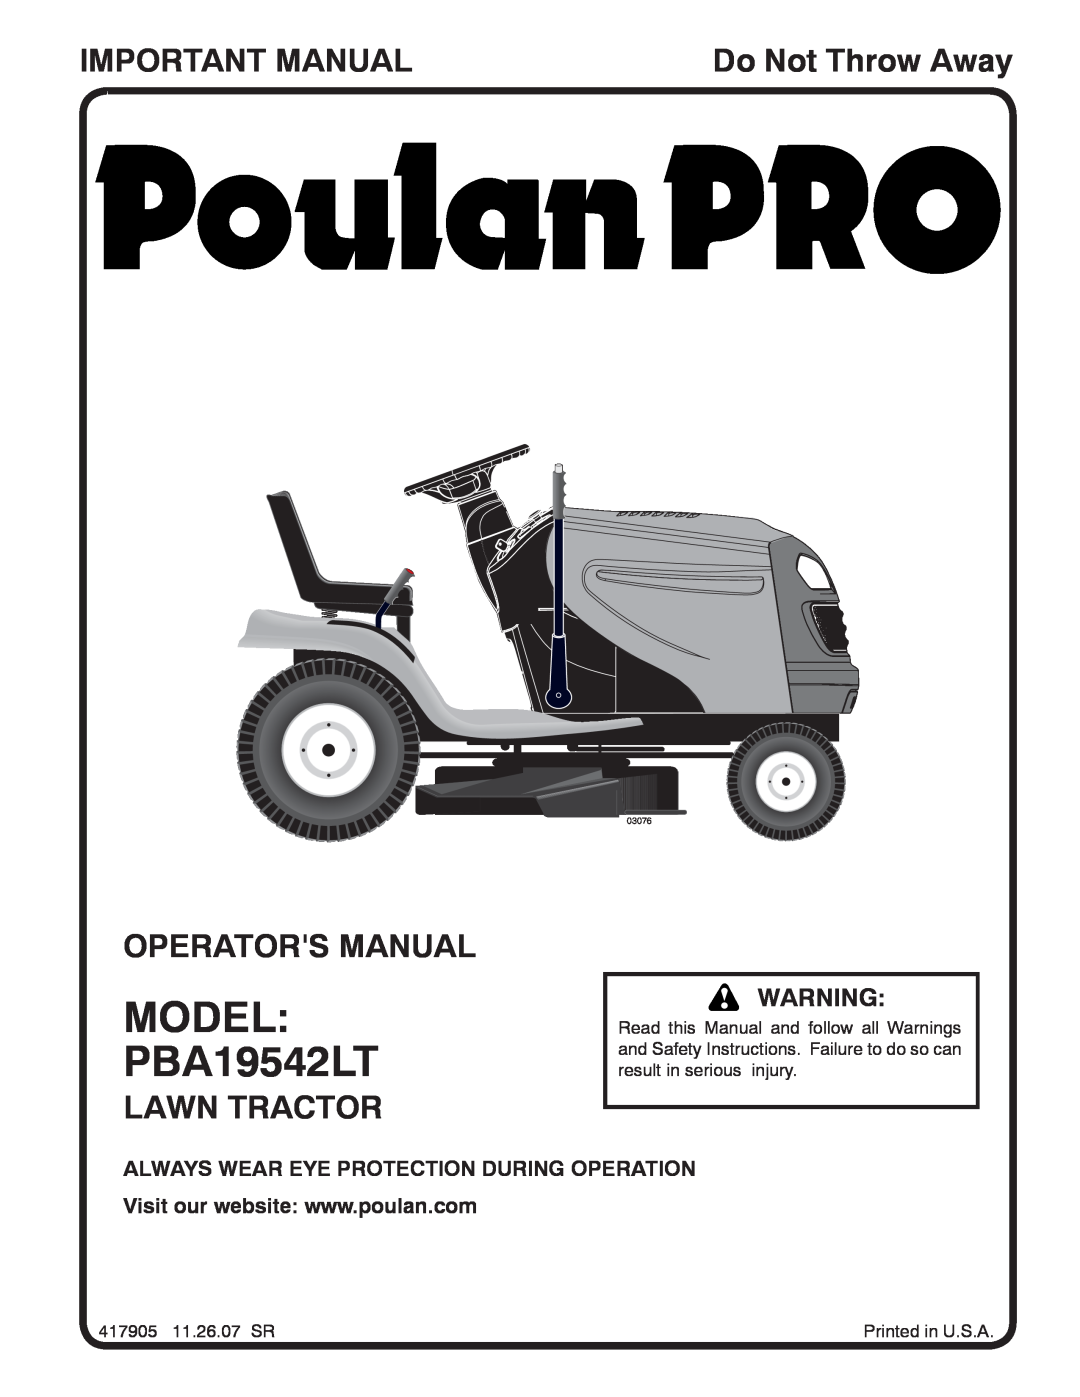 Poulan manual MODEL PBA19542LT, Important Manual, Operators Manual, Lawn Tractor, Do Not Throw Away, 03076 